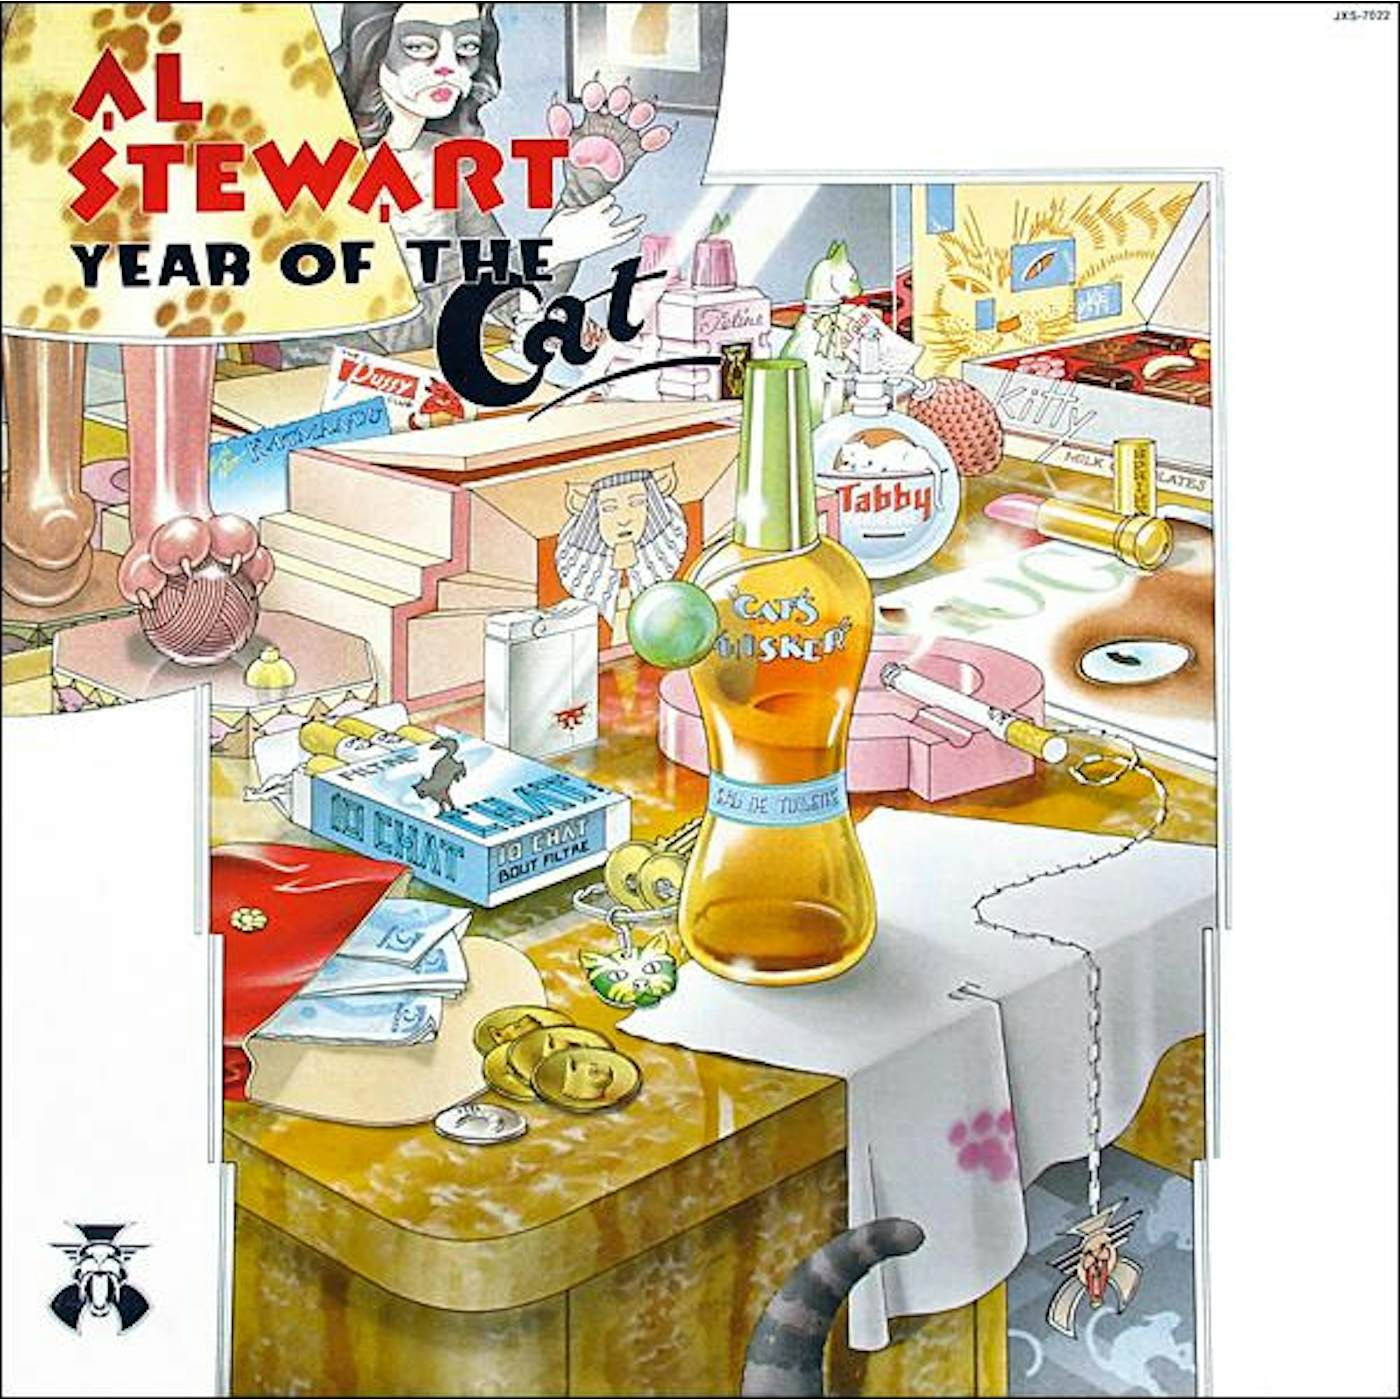 Al Stewart Year of the Cat Vinyl Record